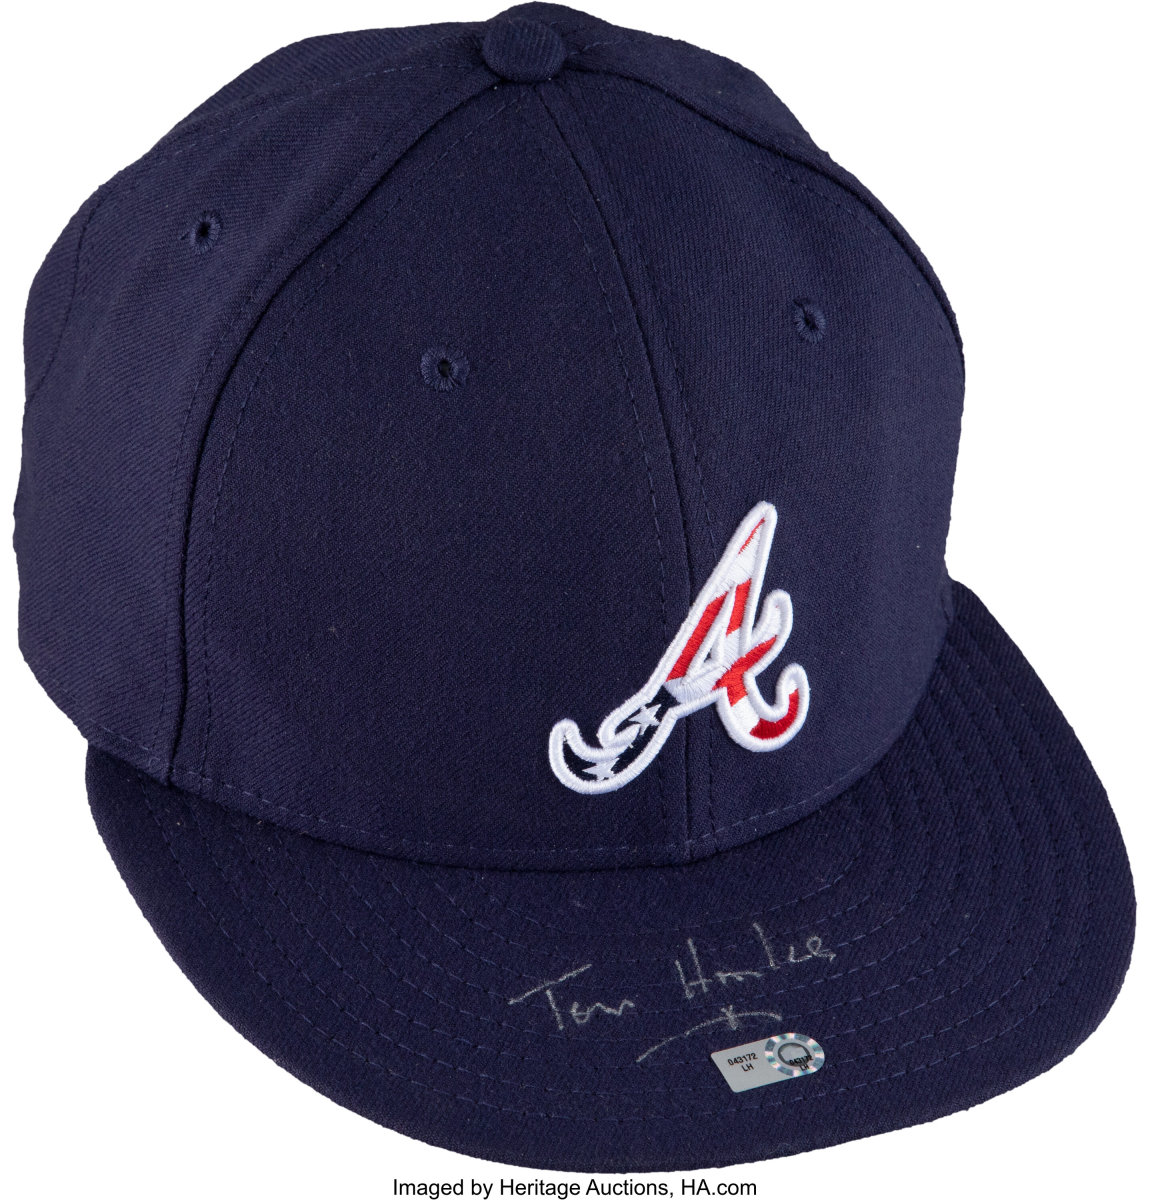 A 2008 Atlanta Braves hat signed by Tom Hanks.